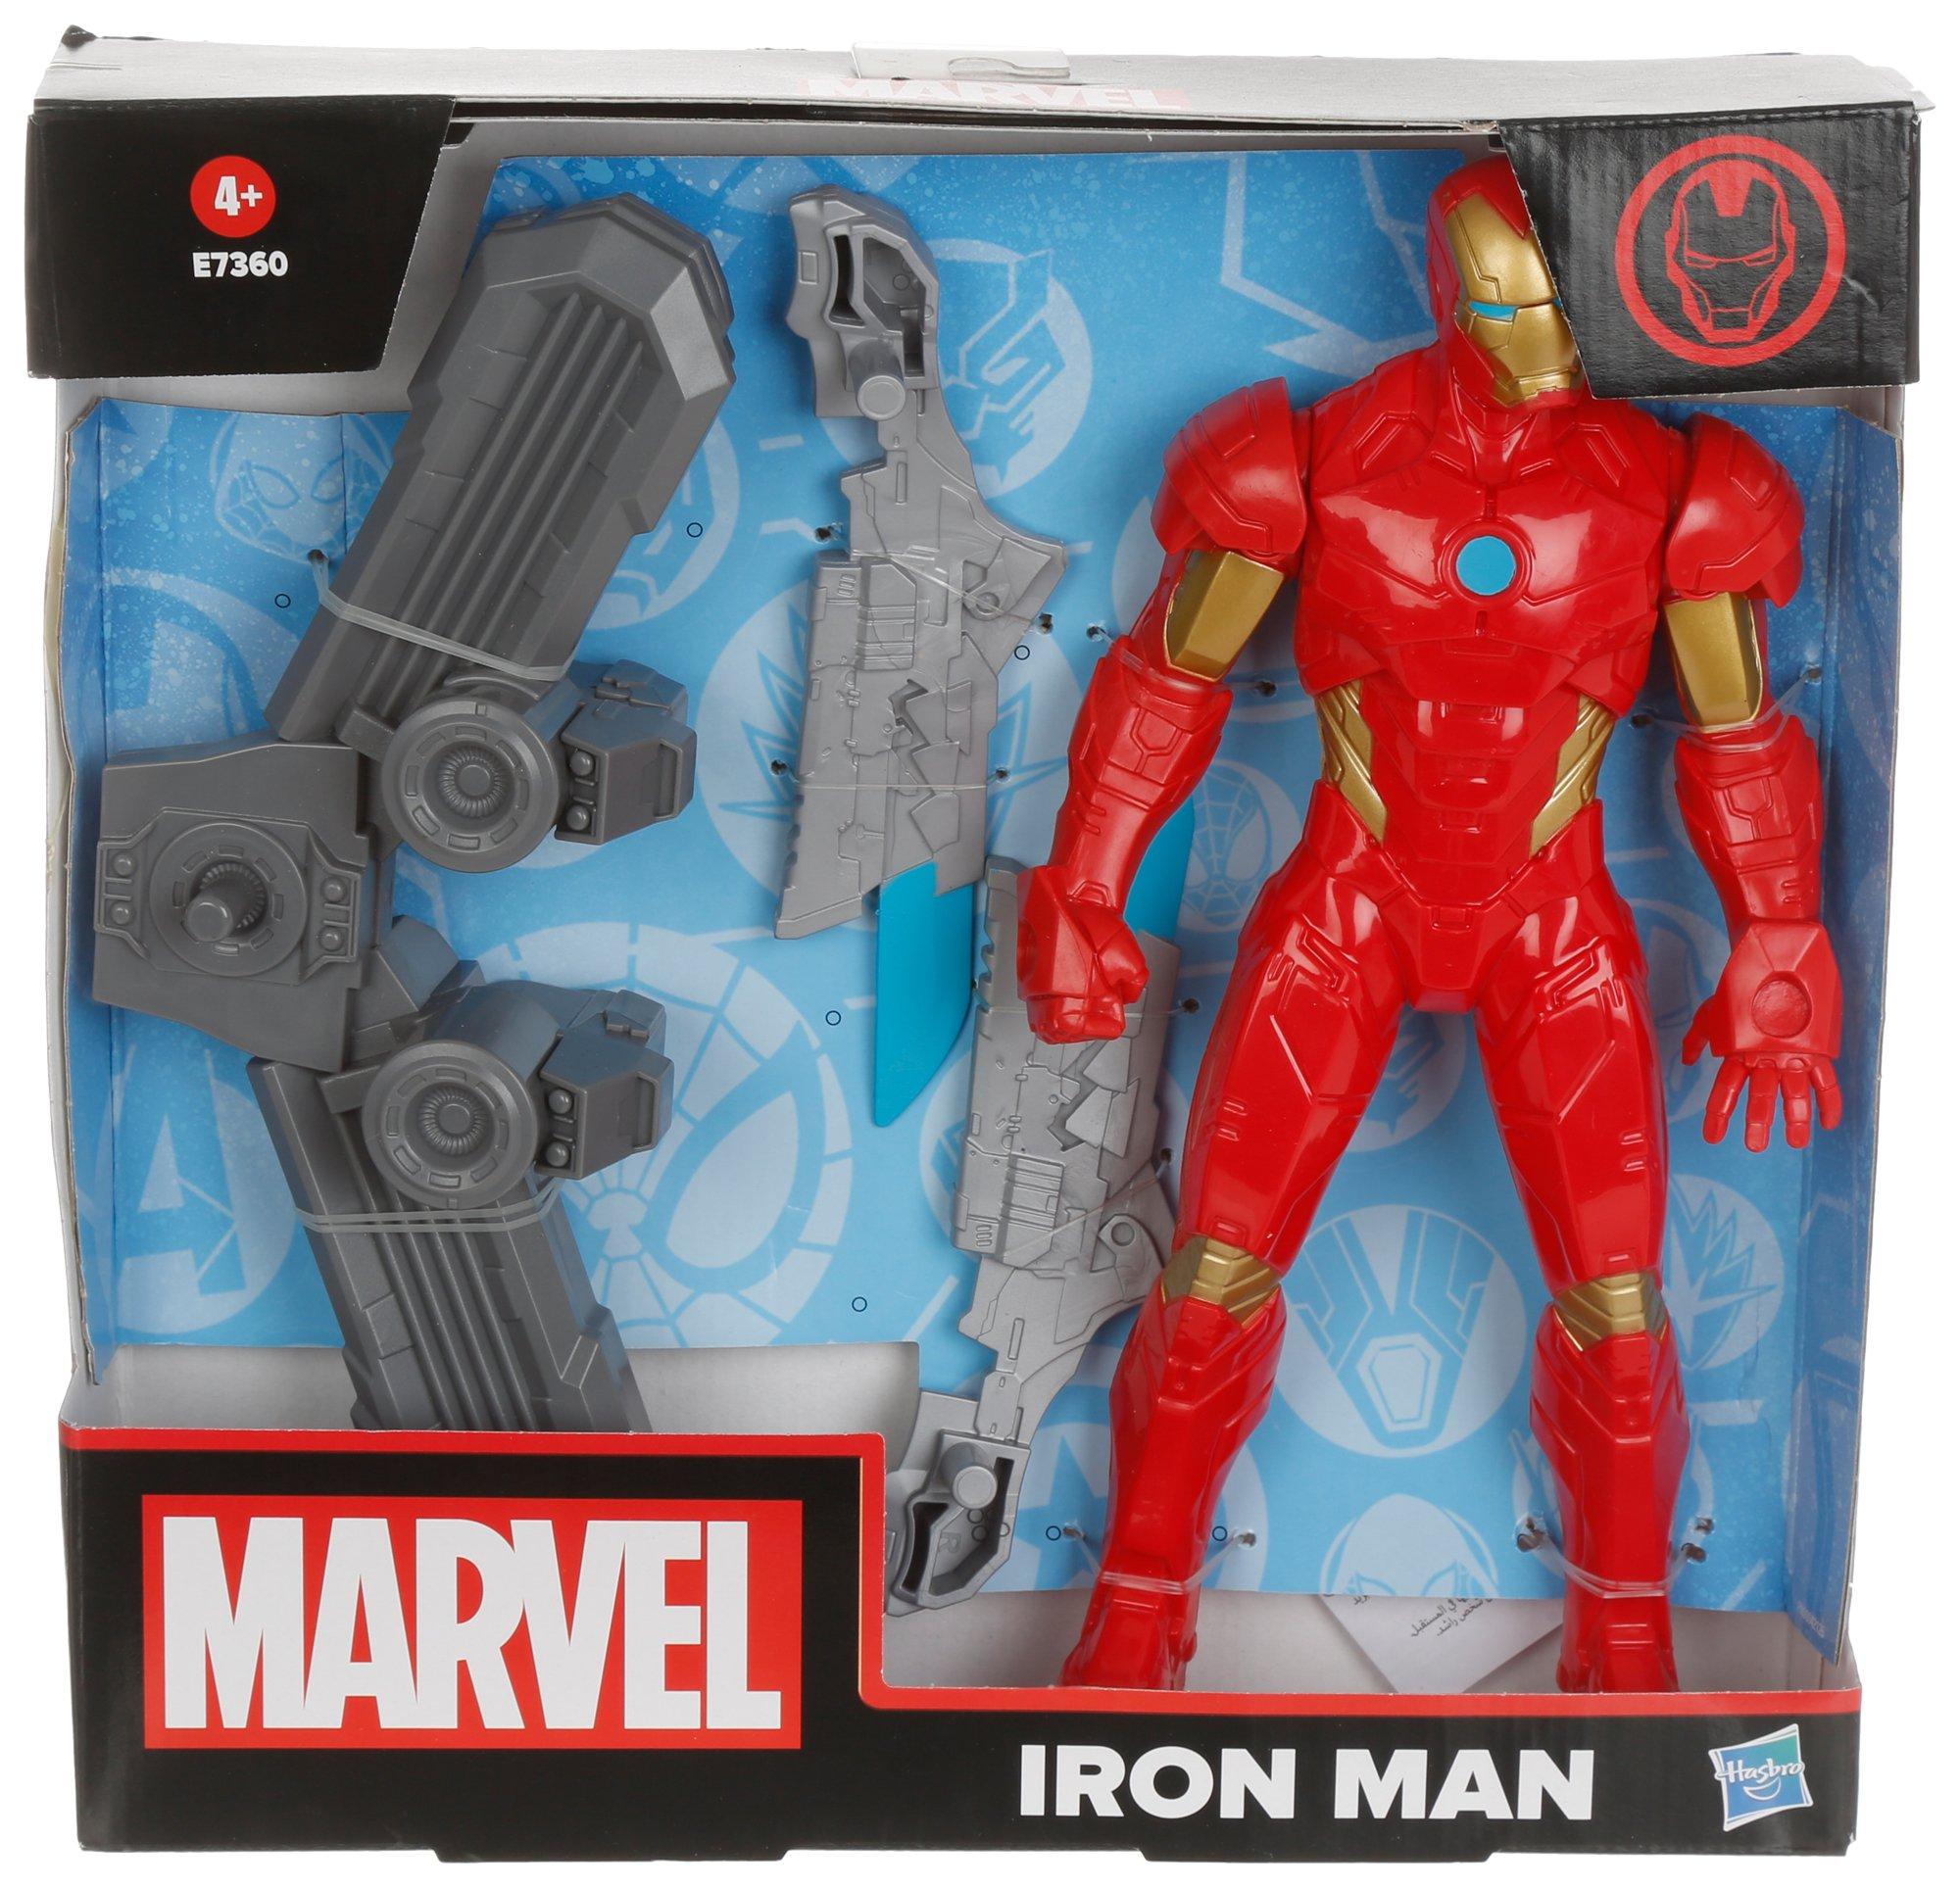 Iron Man Action Figure Playset